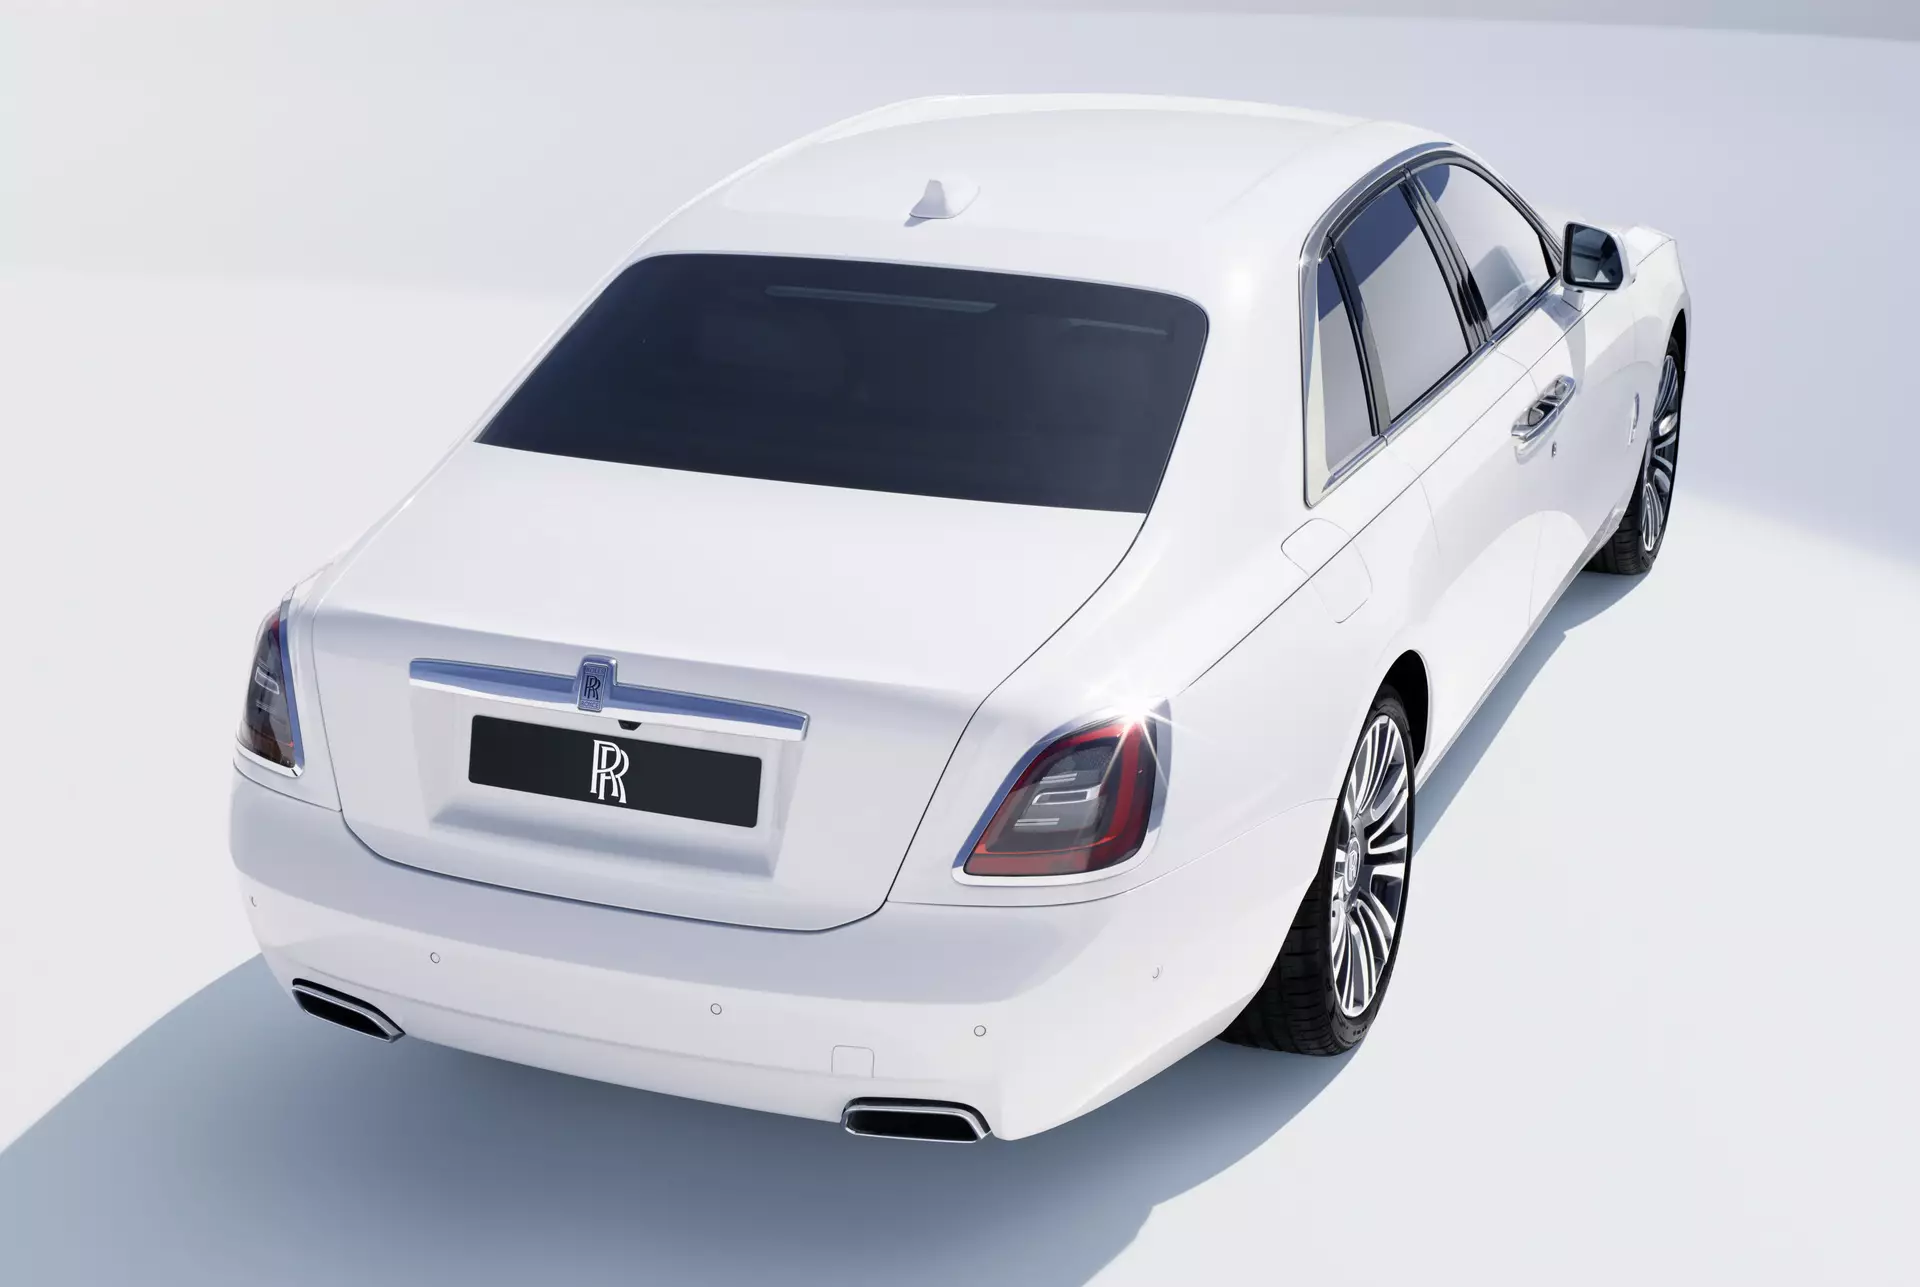 2021 Rolls-Royce Ẹmi